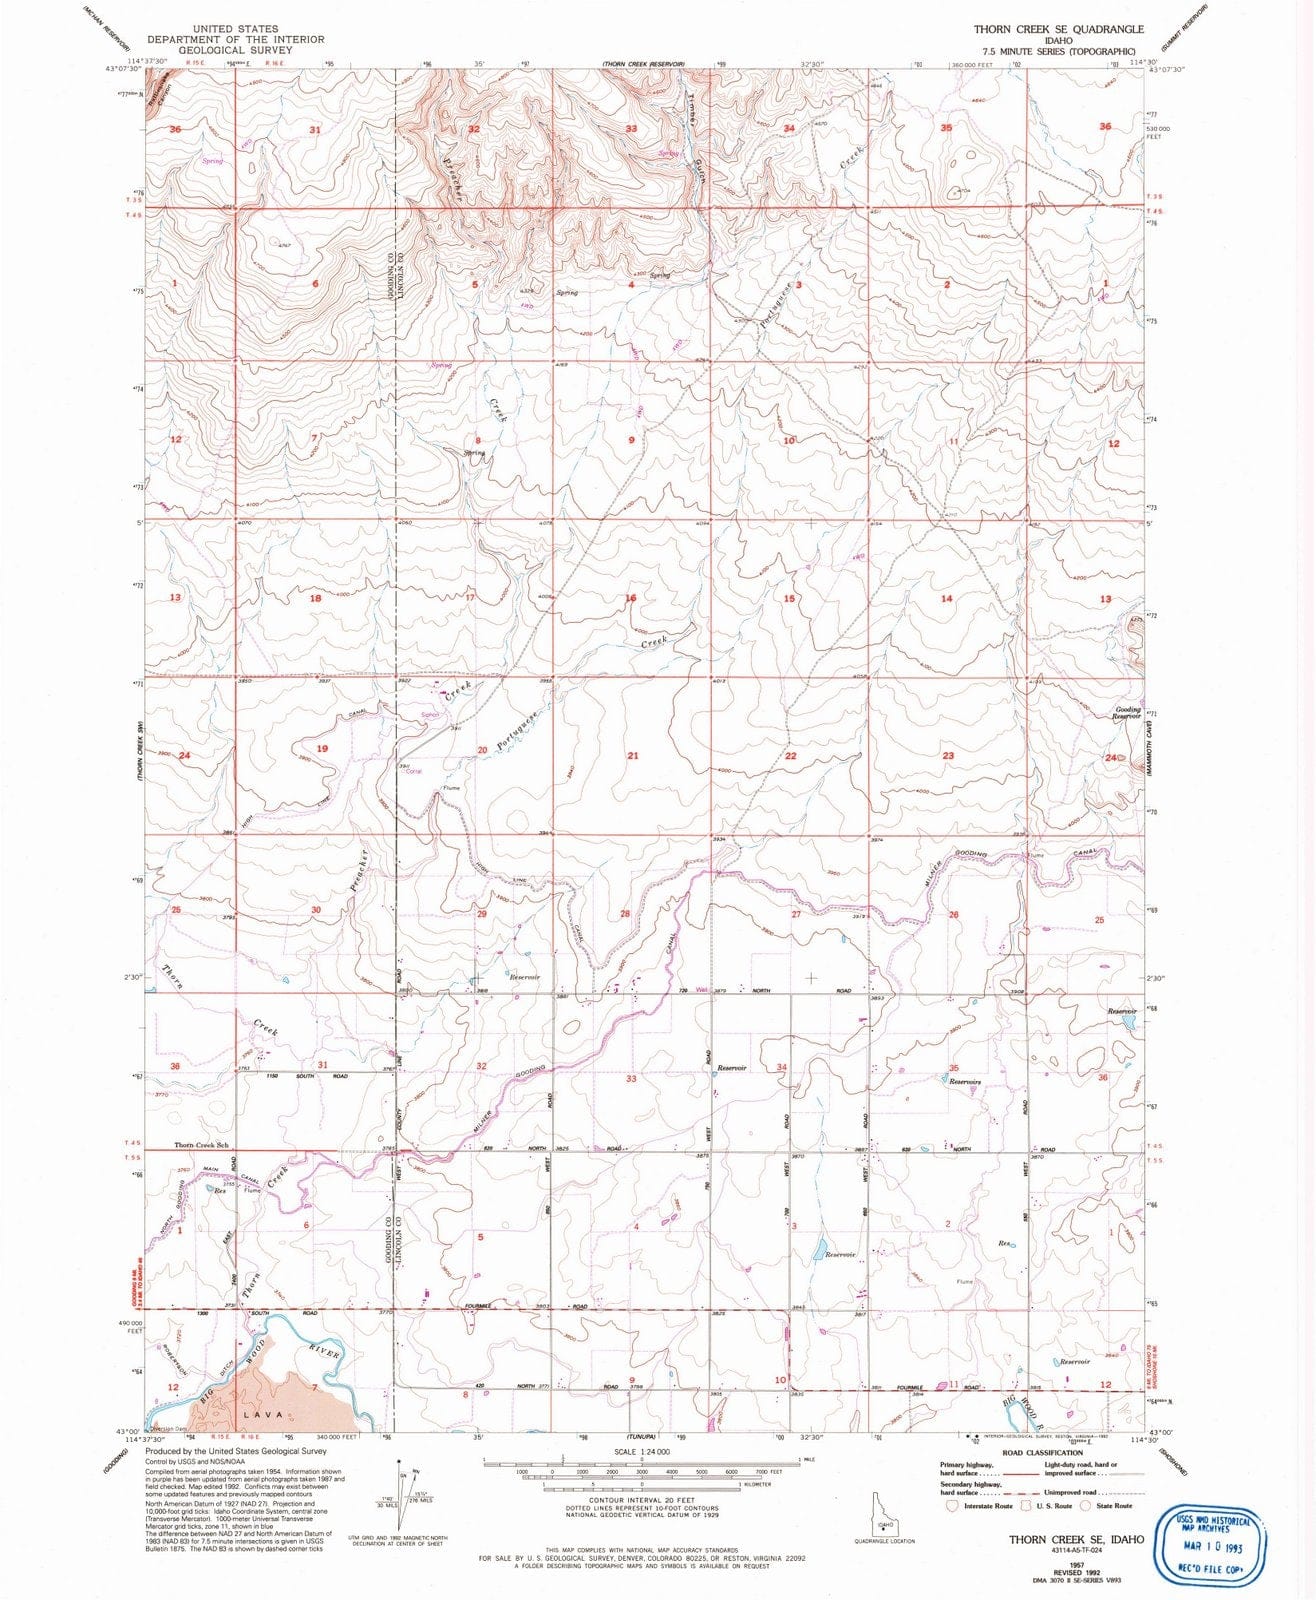 1957 Thorn Creek, ID - Idaho - USGS Topographic Map